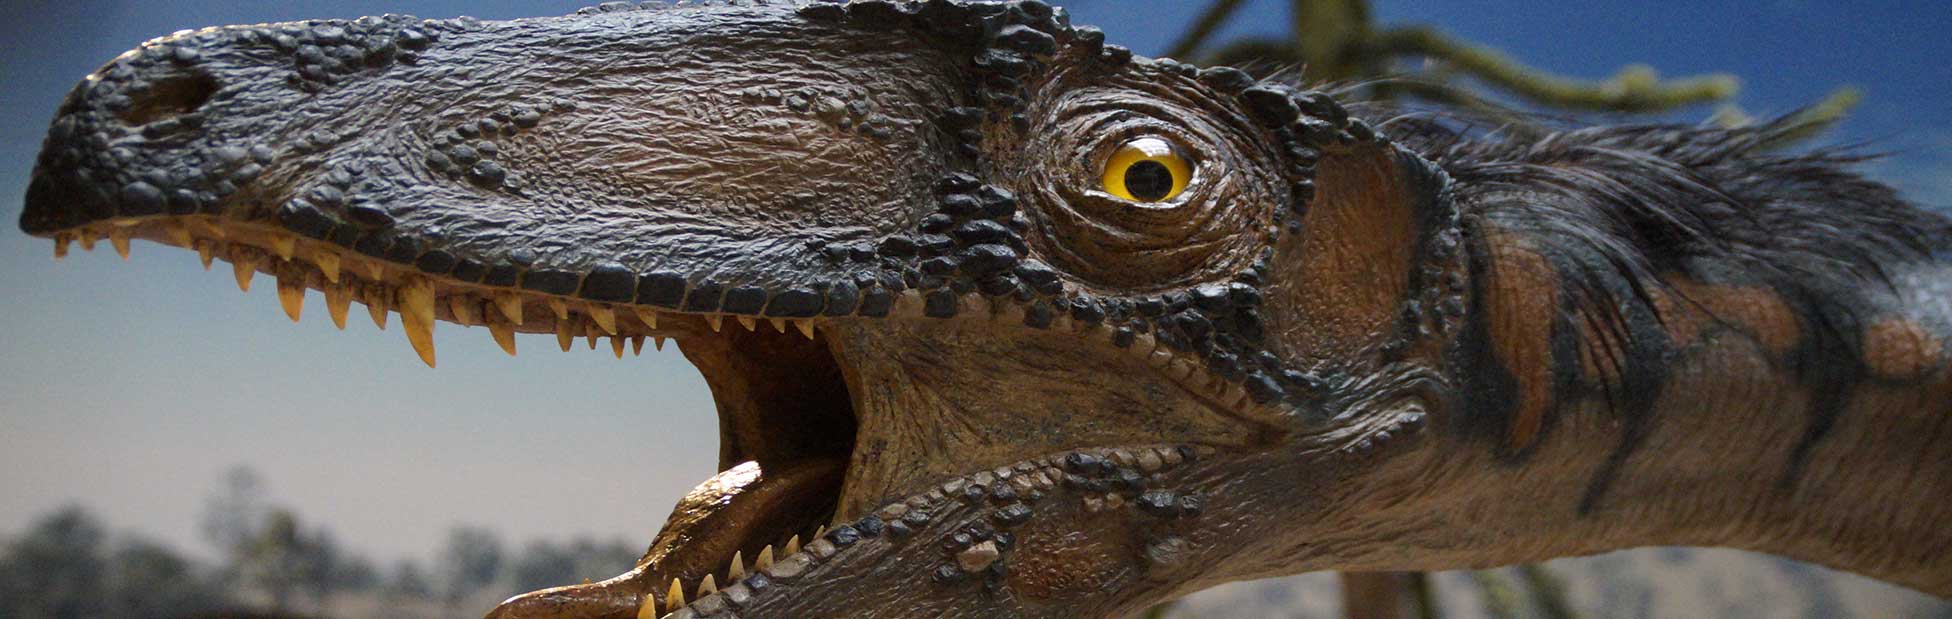 Dinosaur showing its teeth